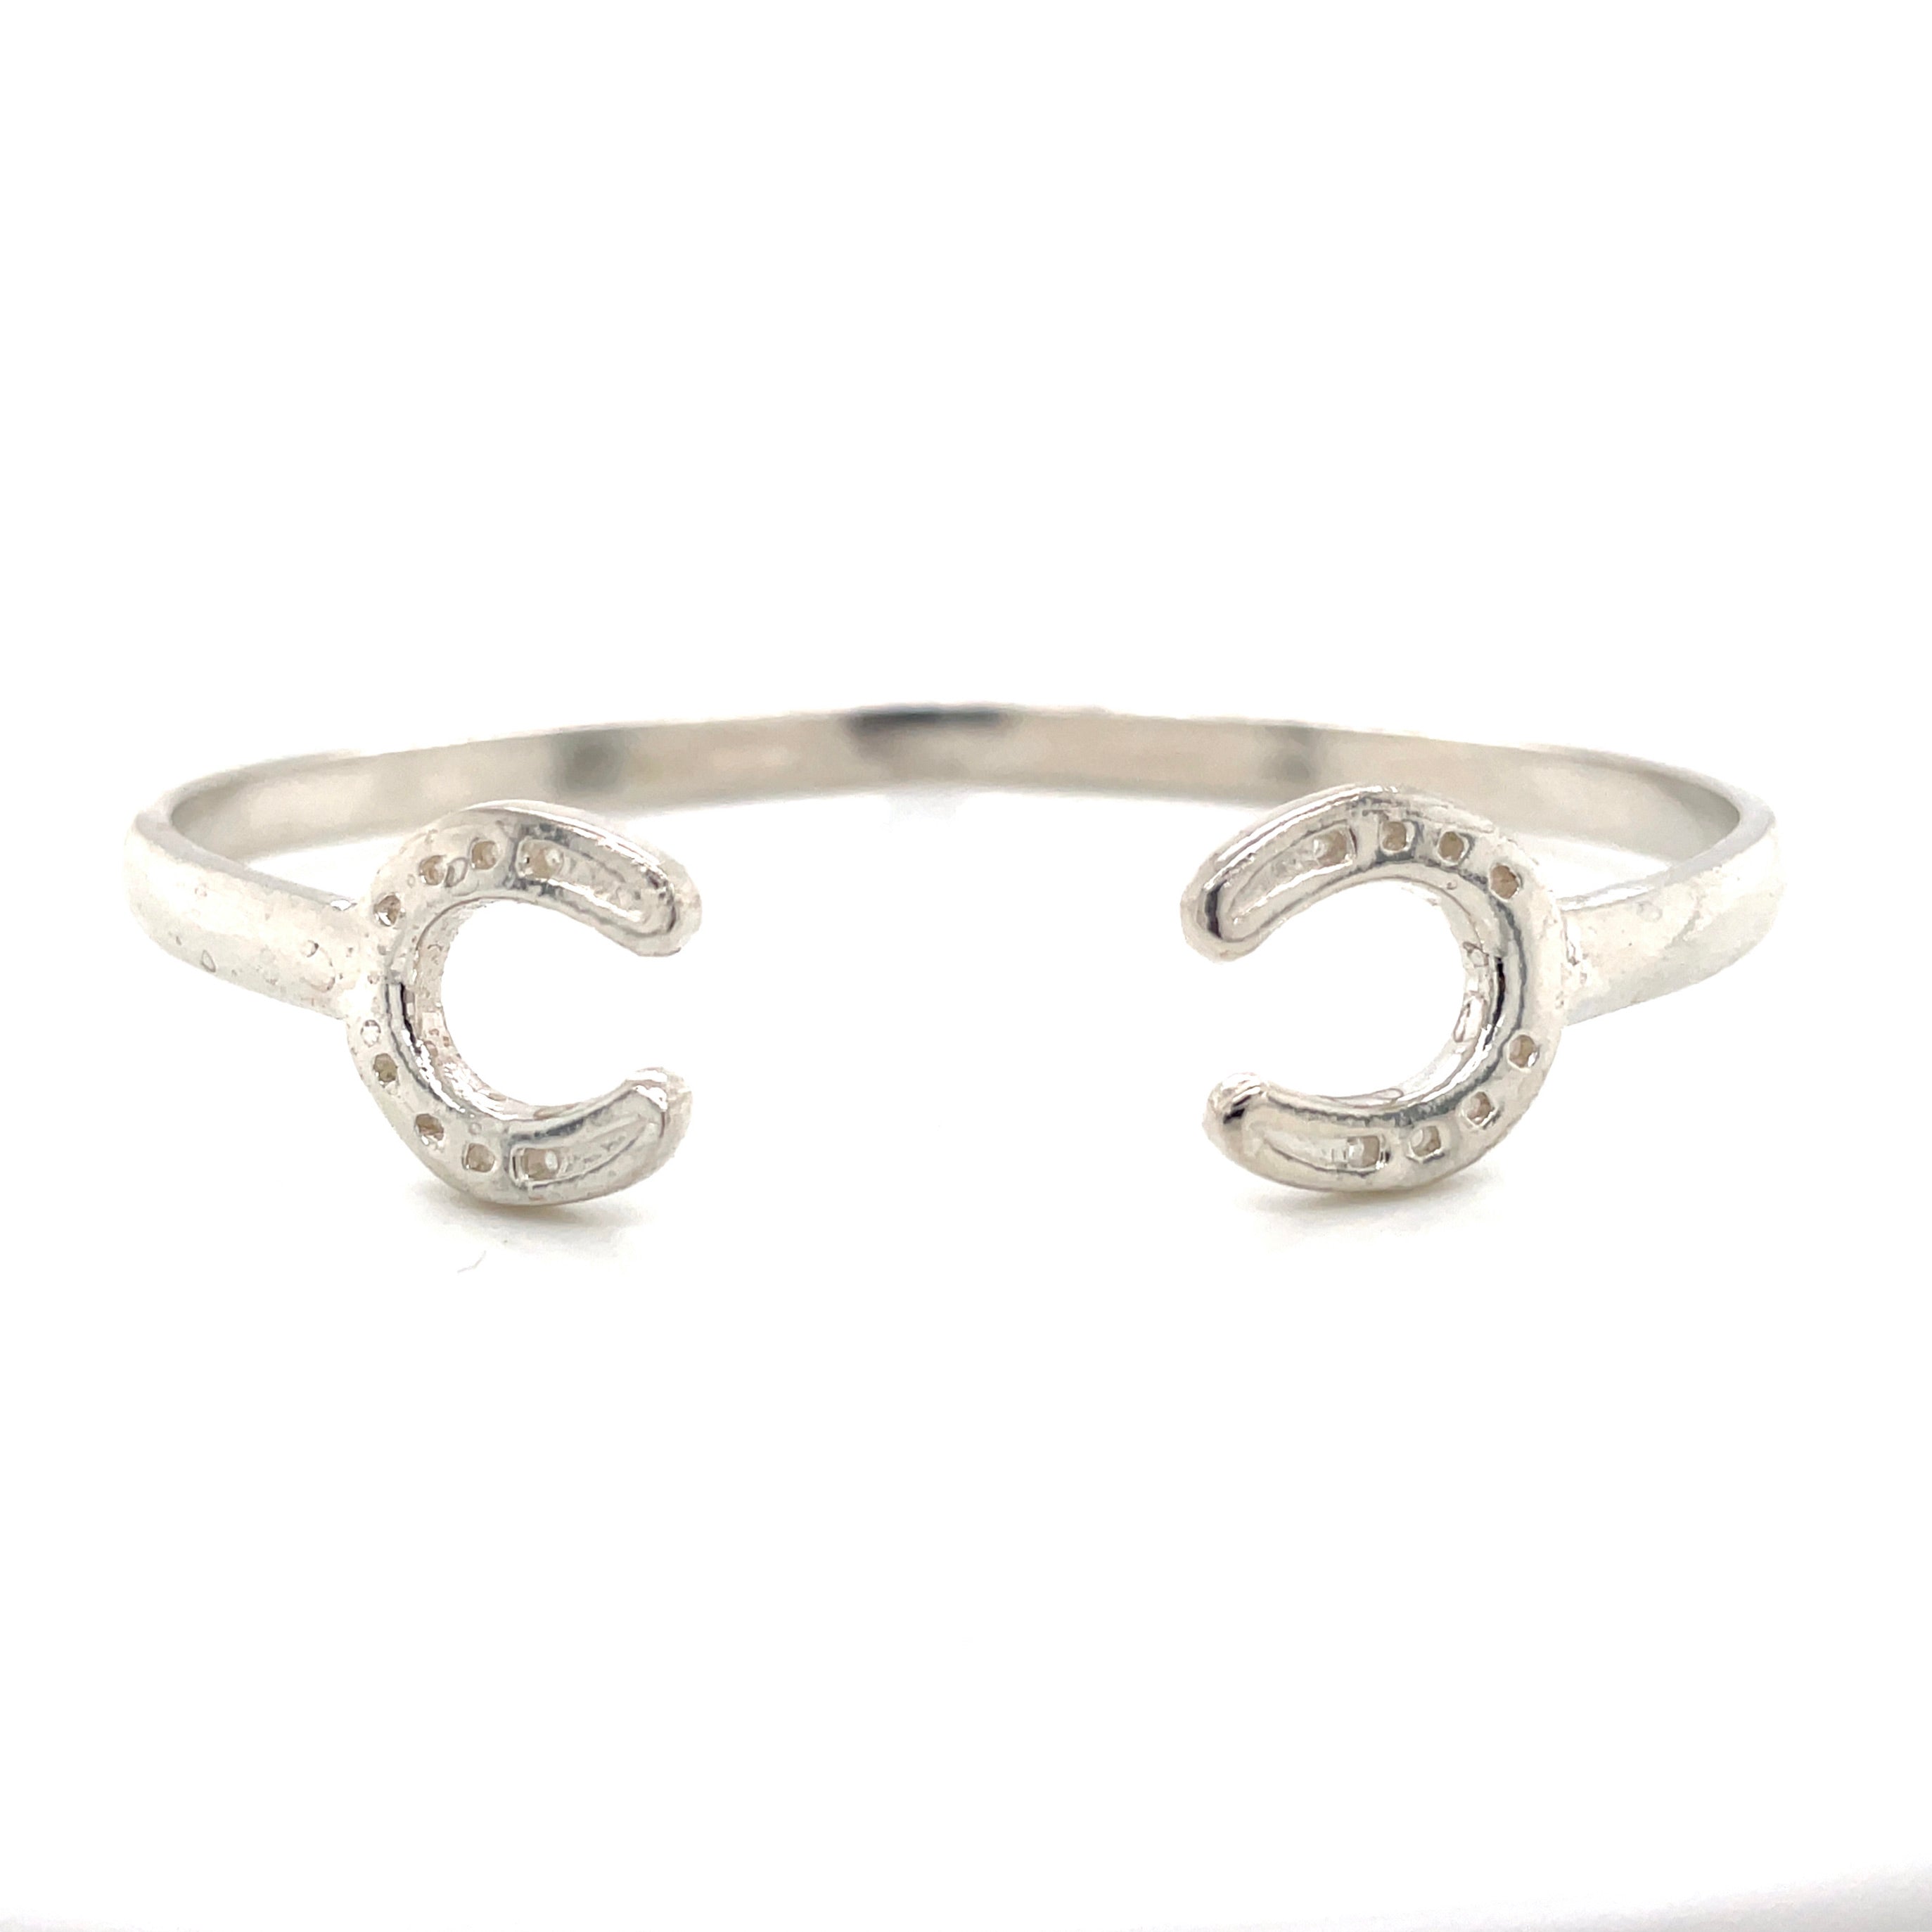 Sterling silver equestrian horseshoe bracelet